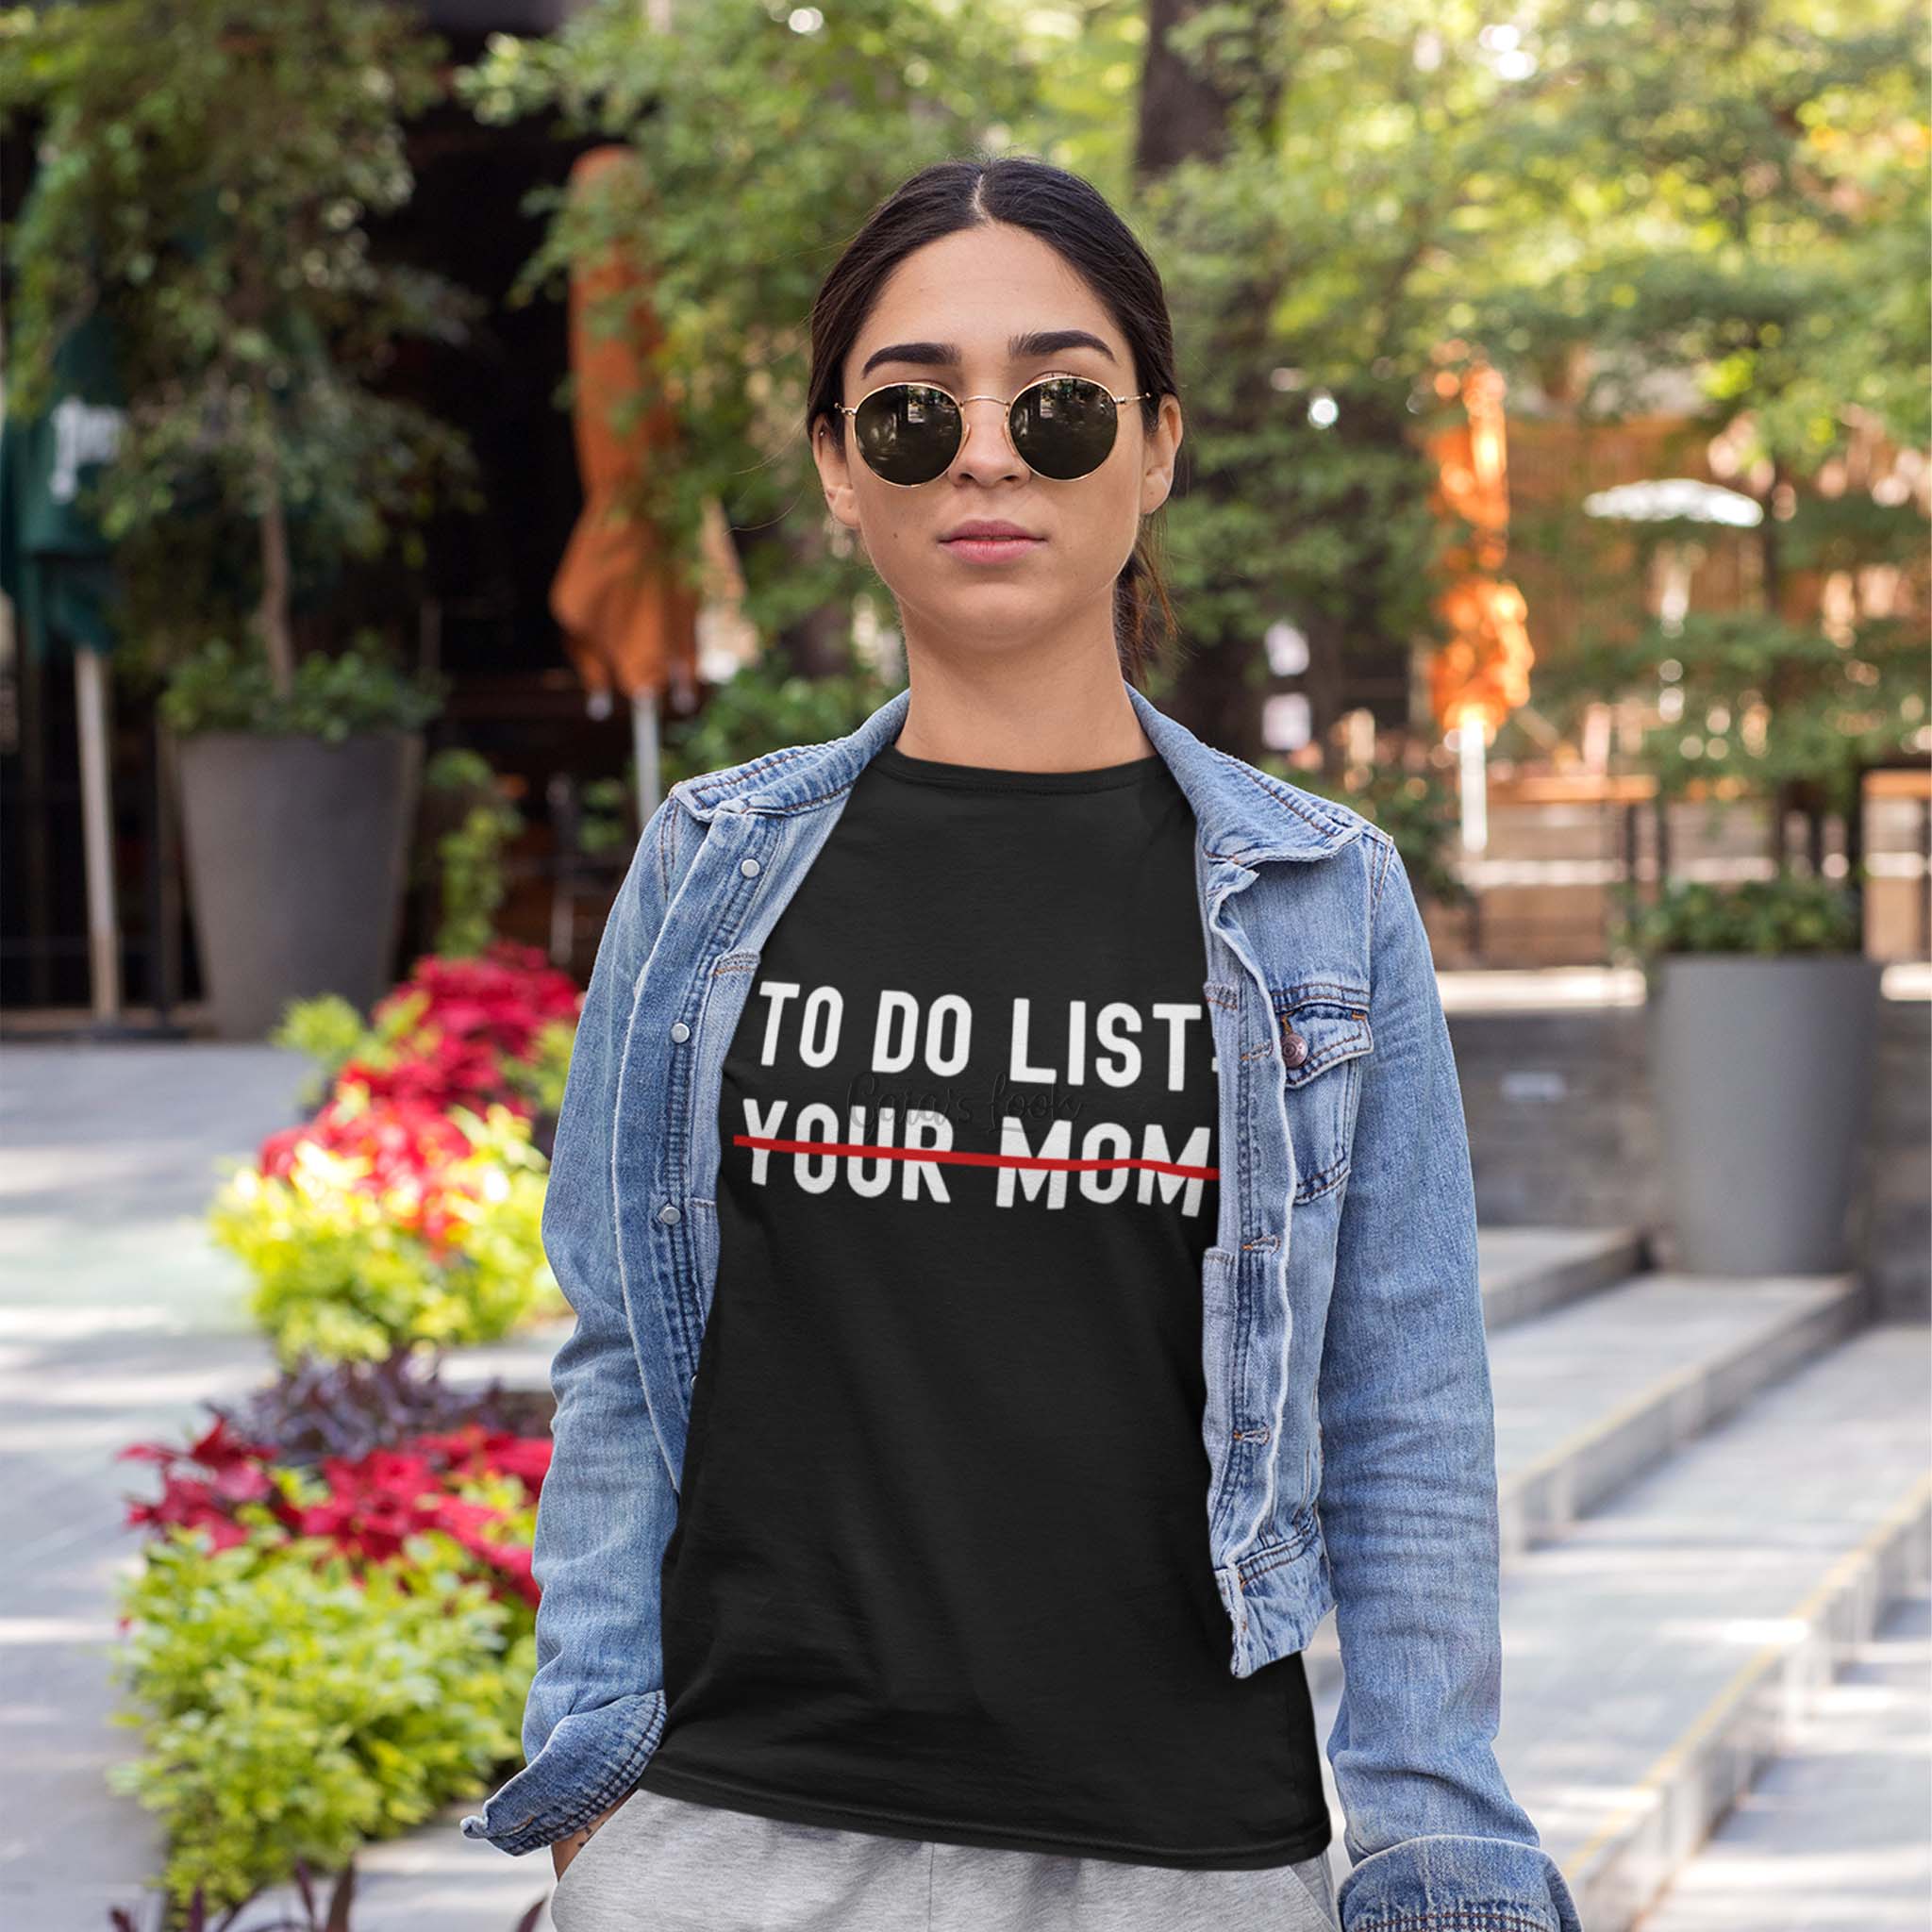 To Do List: Your Mom T-Shirt| Funny Shirt